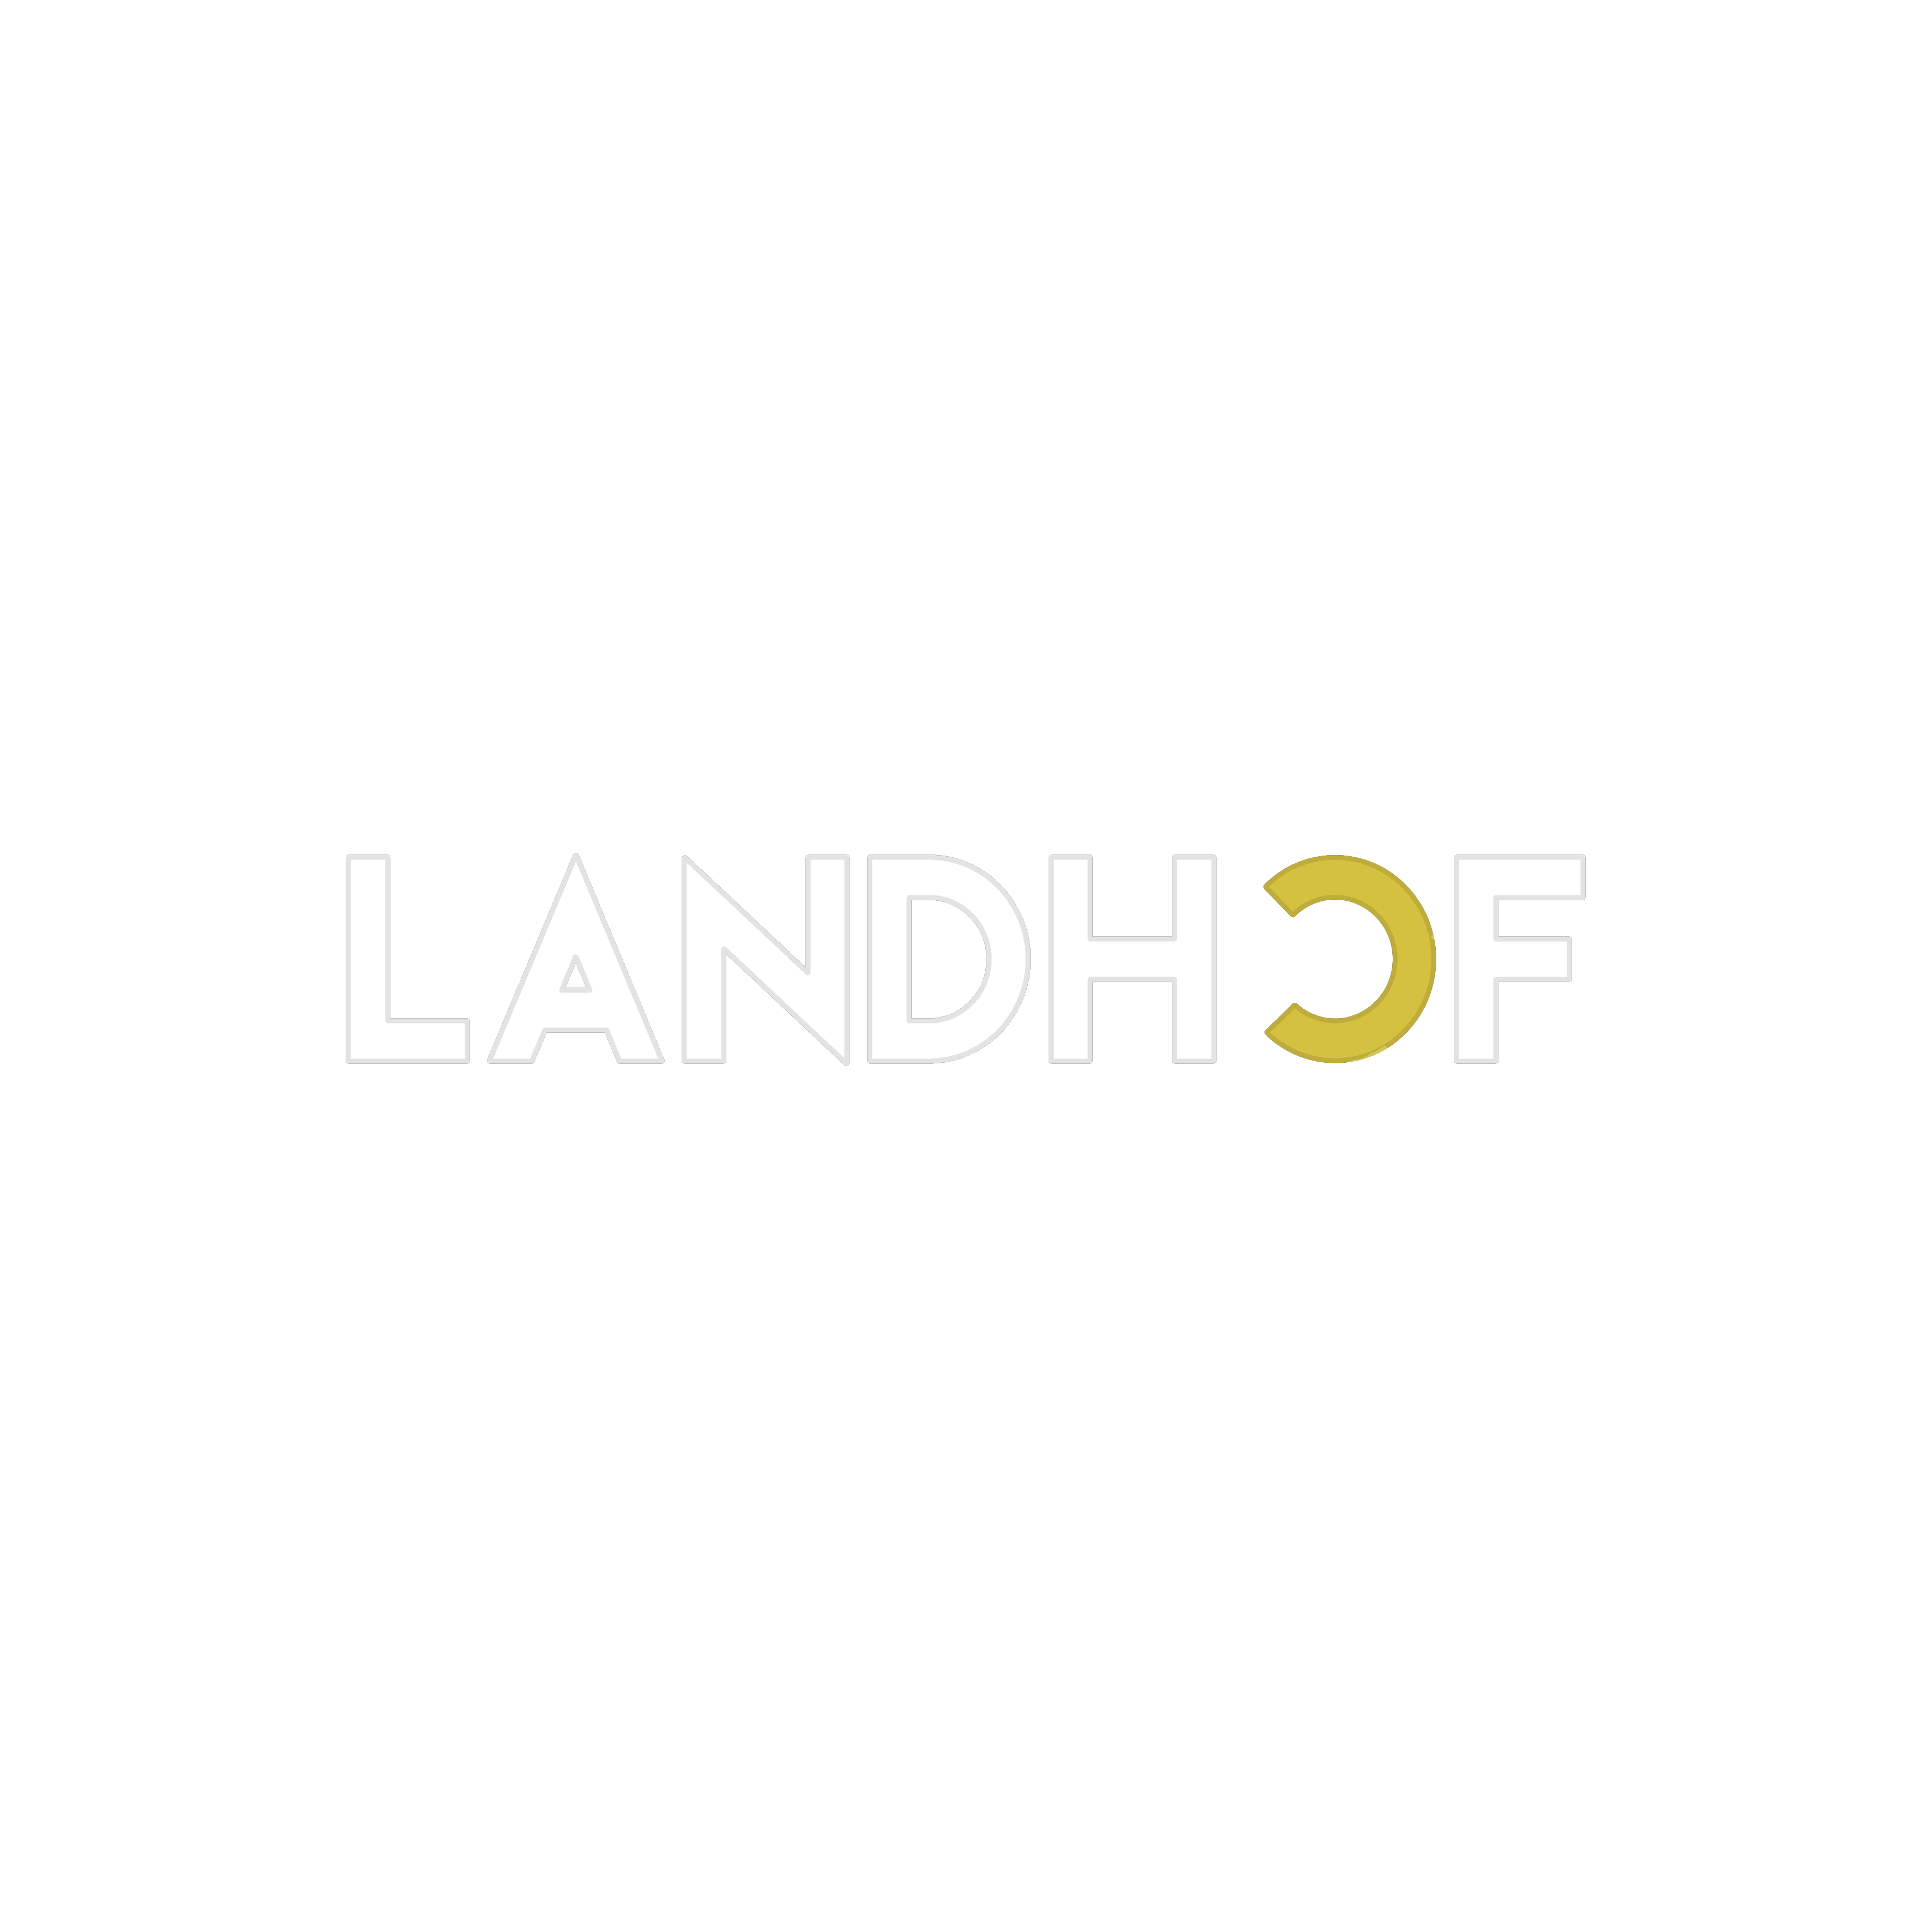 Landhof v2 - Logo schrift white